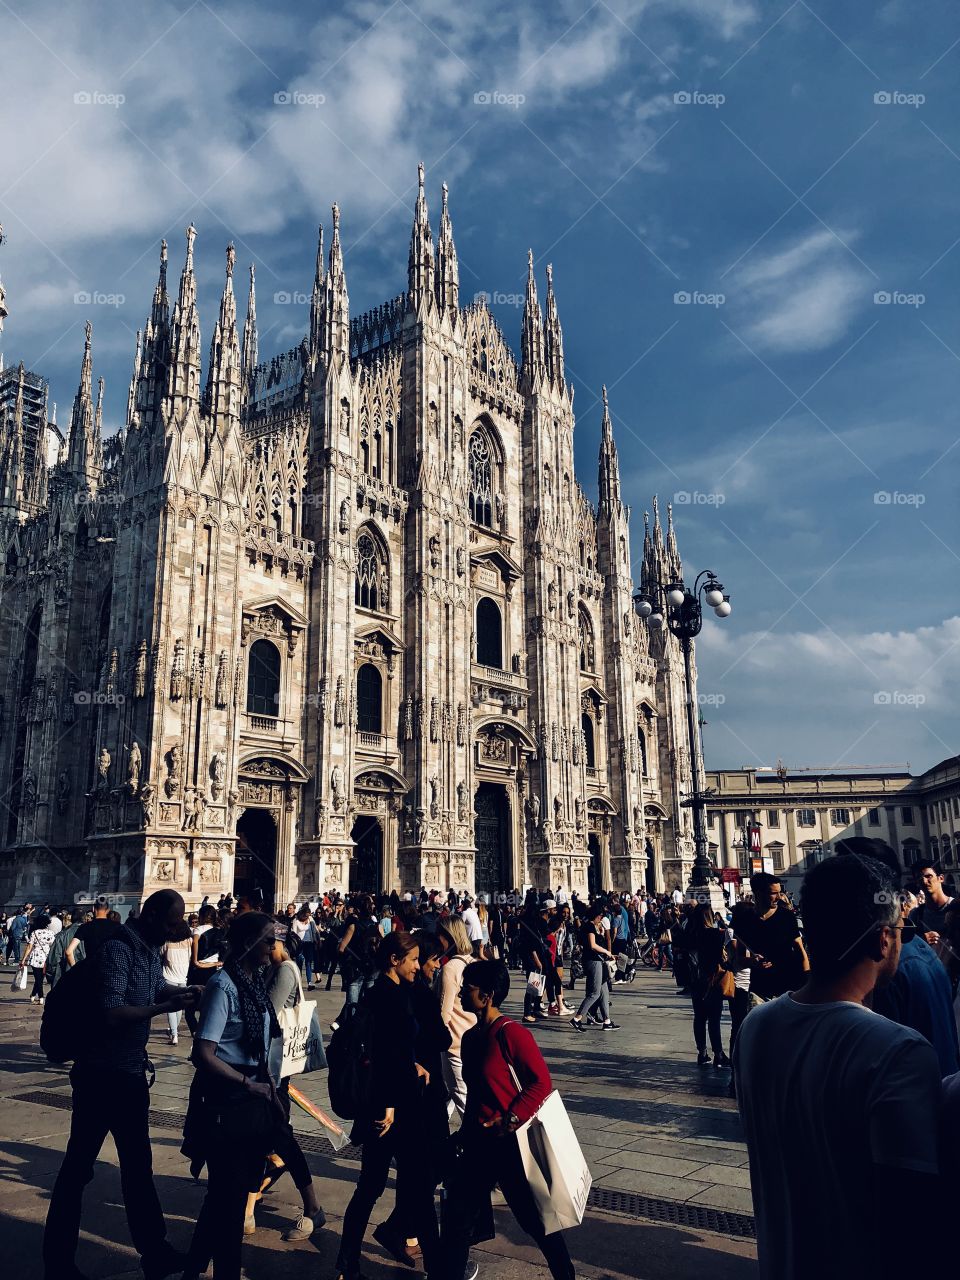 Duomo di Milano,italy